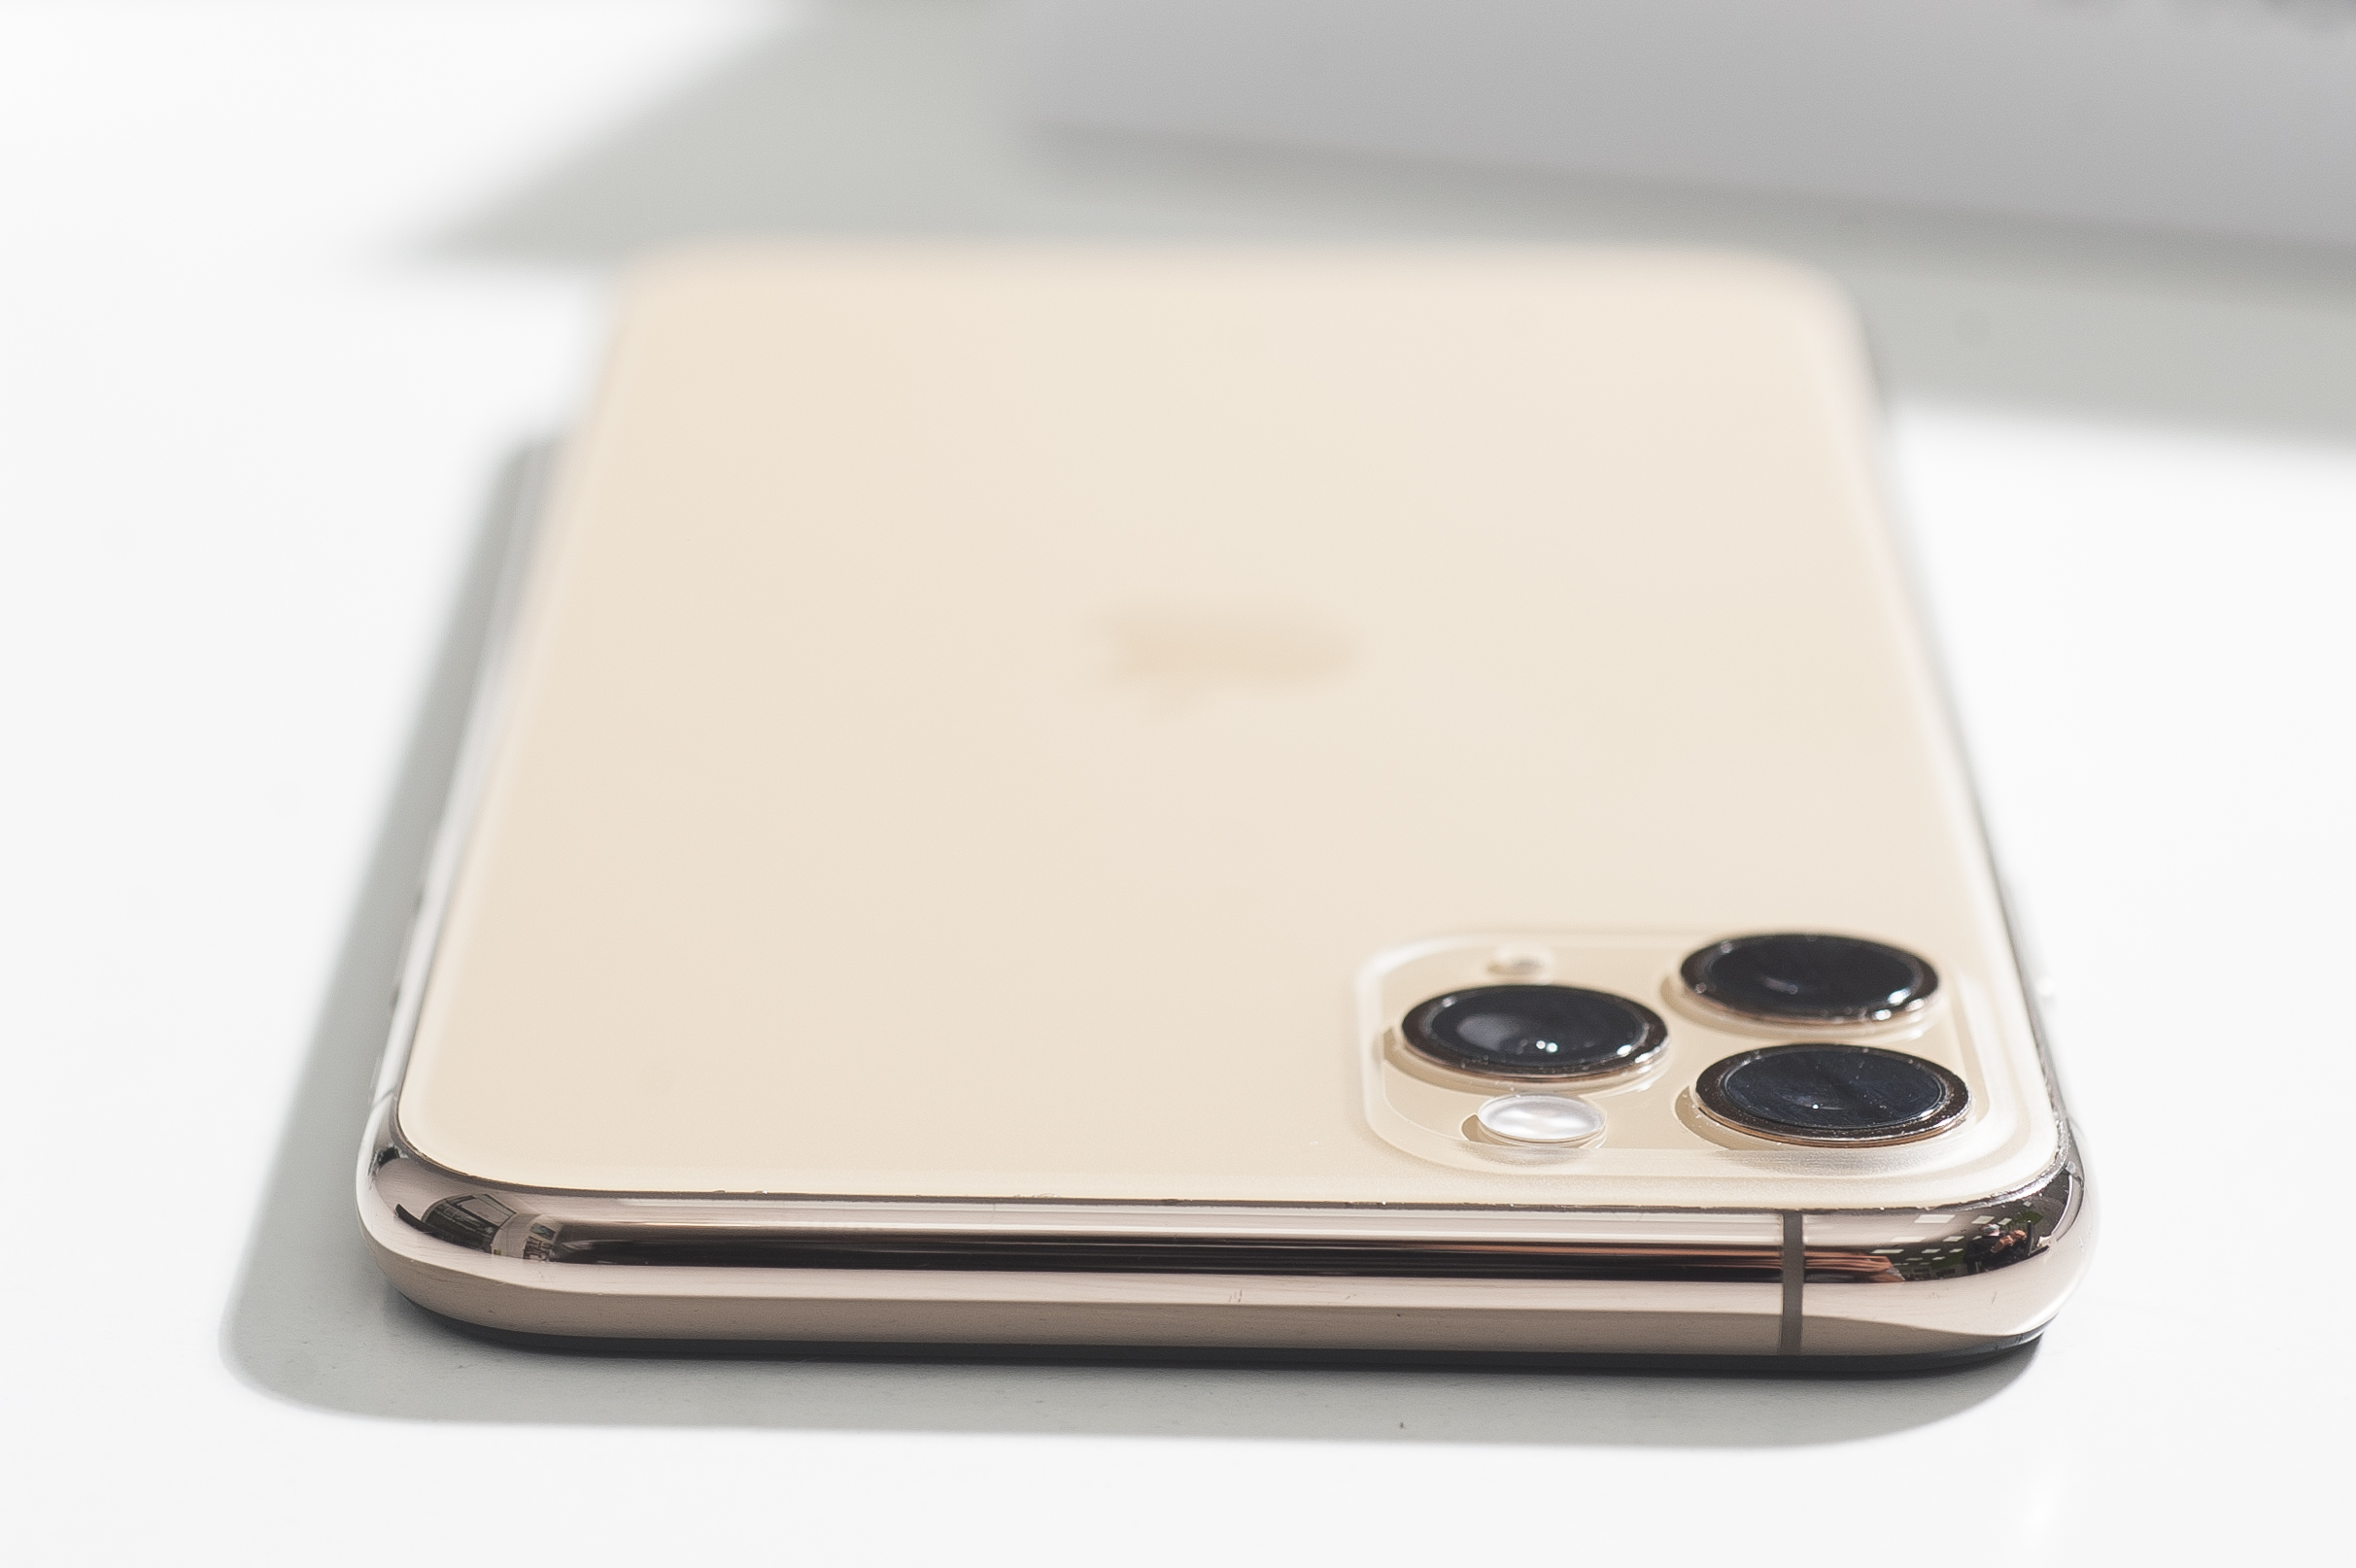 iPhone 11 Pro Max 256gb, Gold (MWH62) б/у